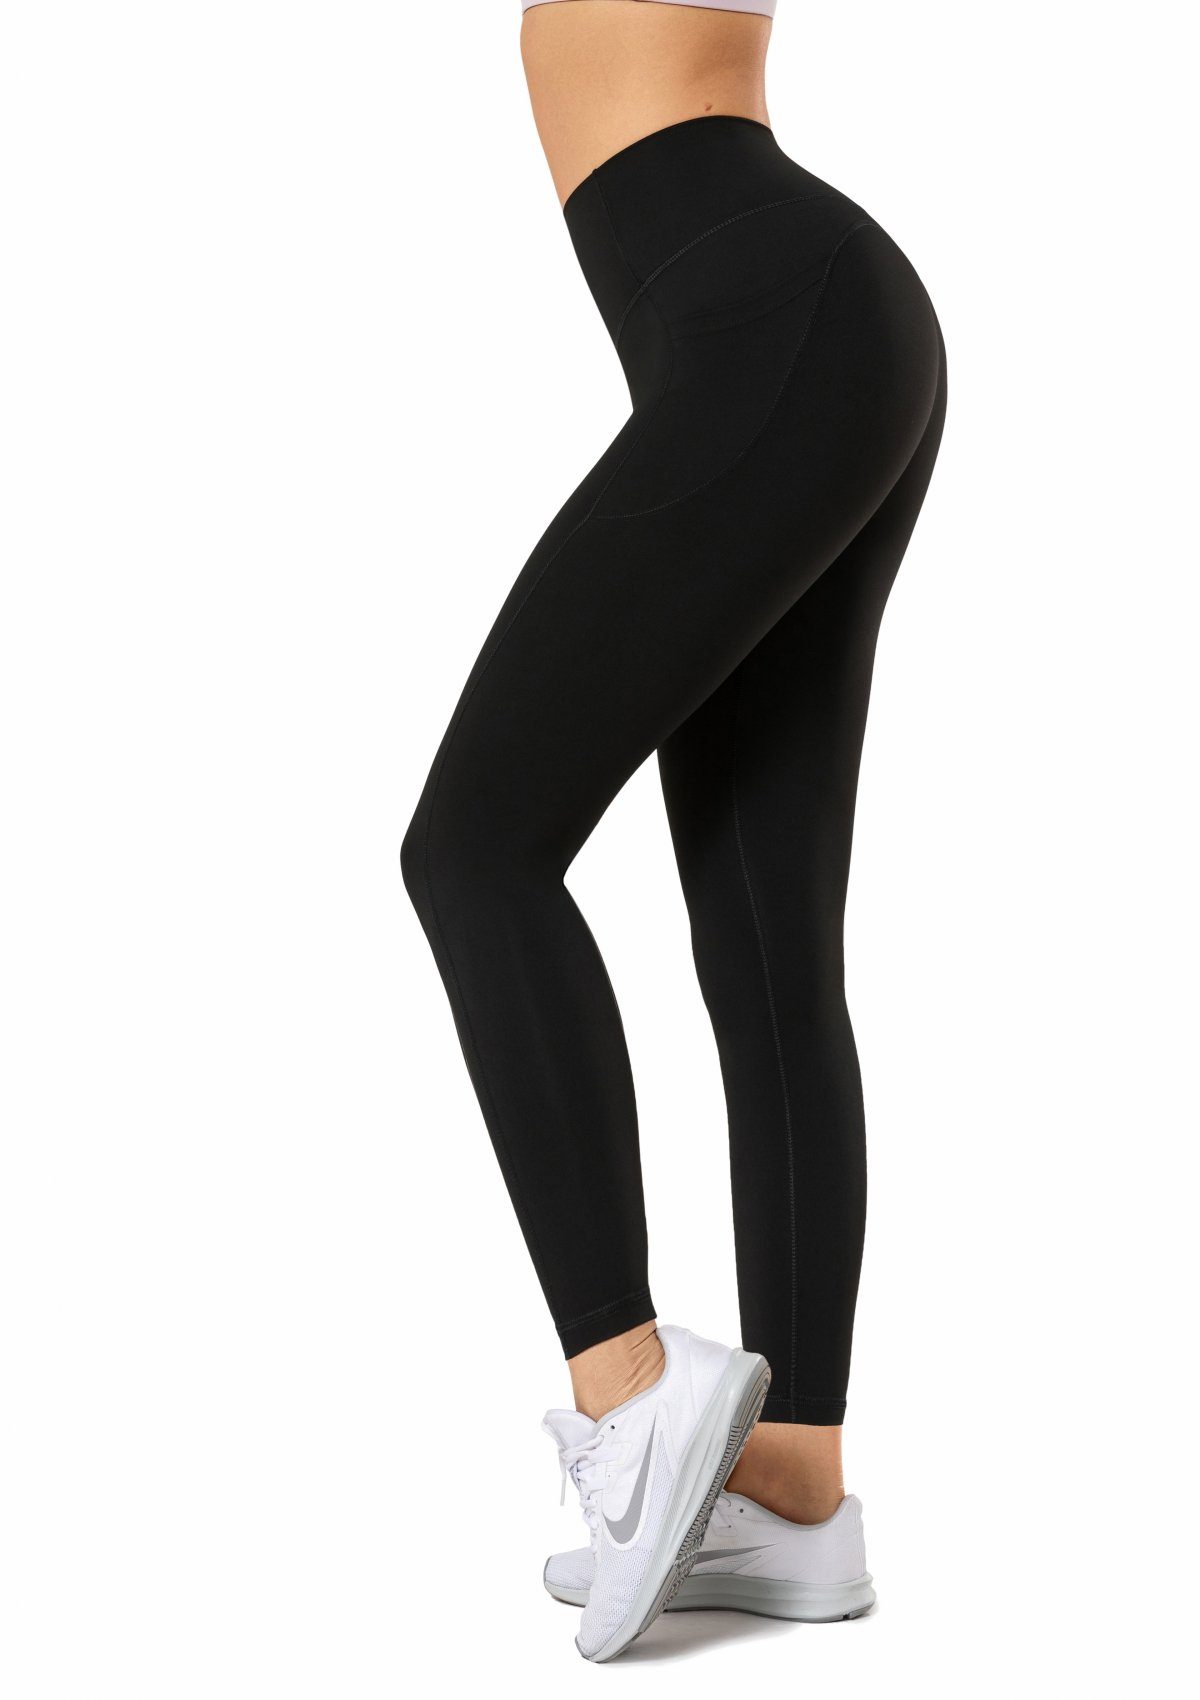 Yvette Sporthose Hohe Taille, blickdicht, mit Seitentasche, Fitness Yoga  Sporthose, Streetwear - S110199A online kaufen | OTTO